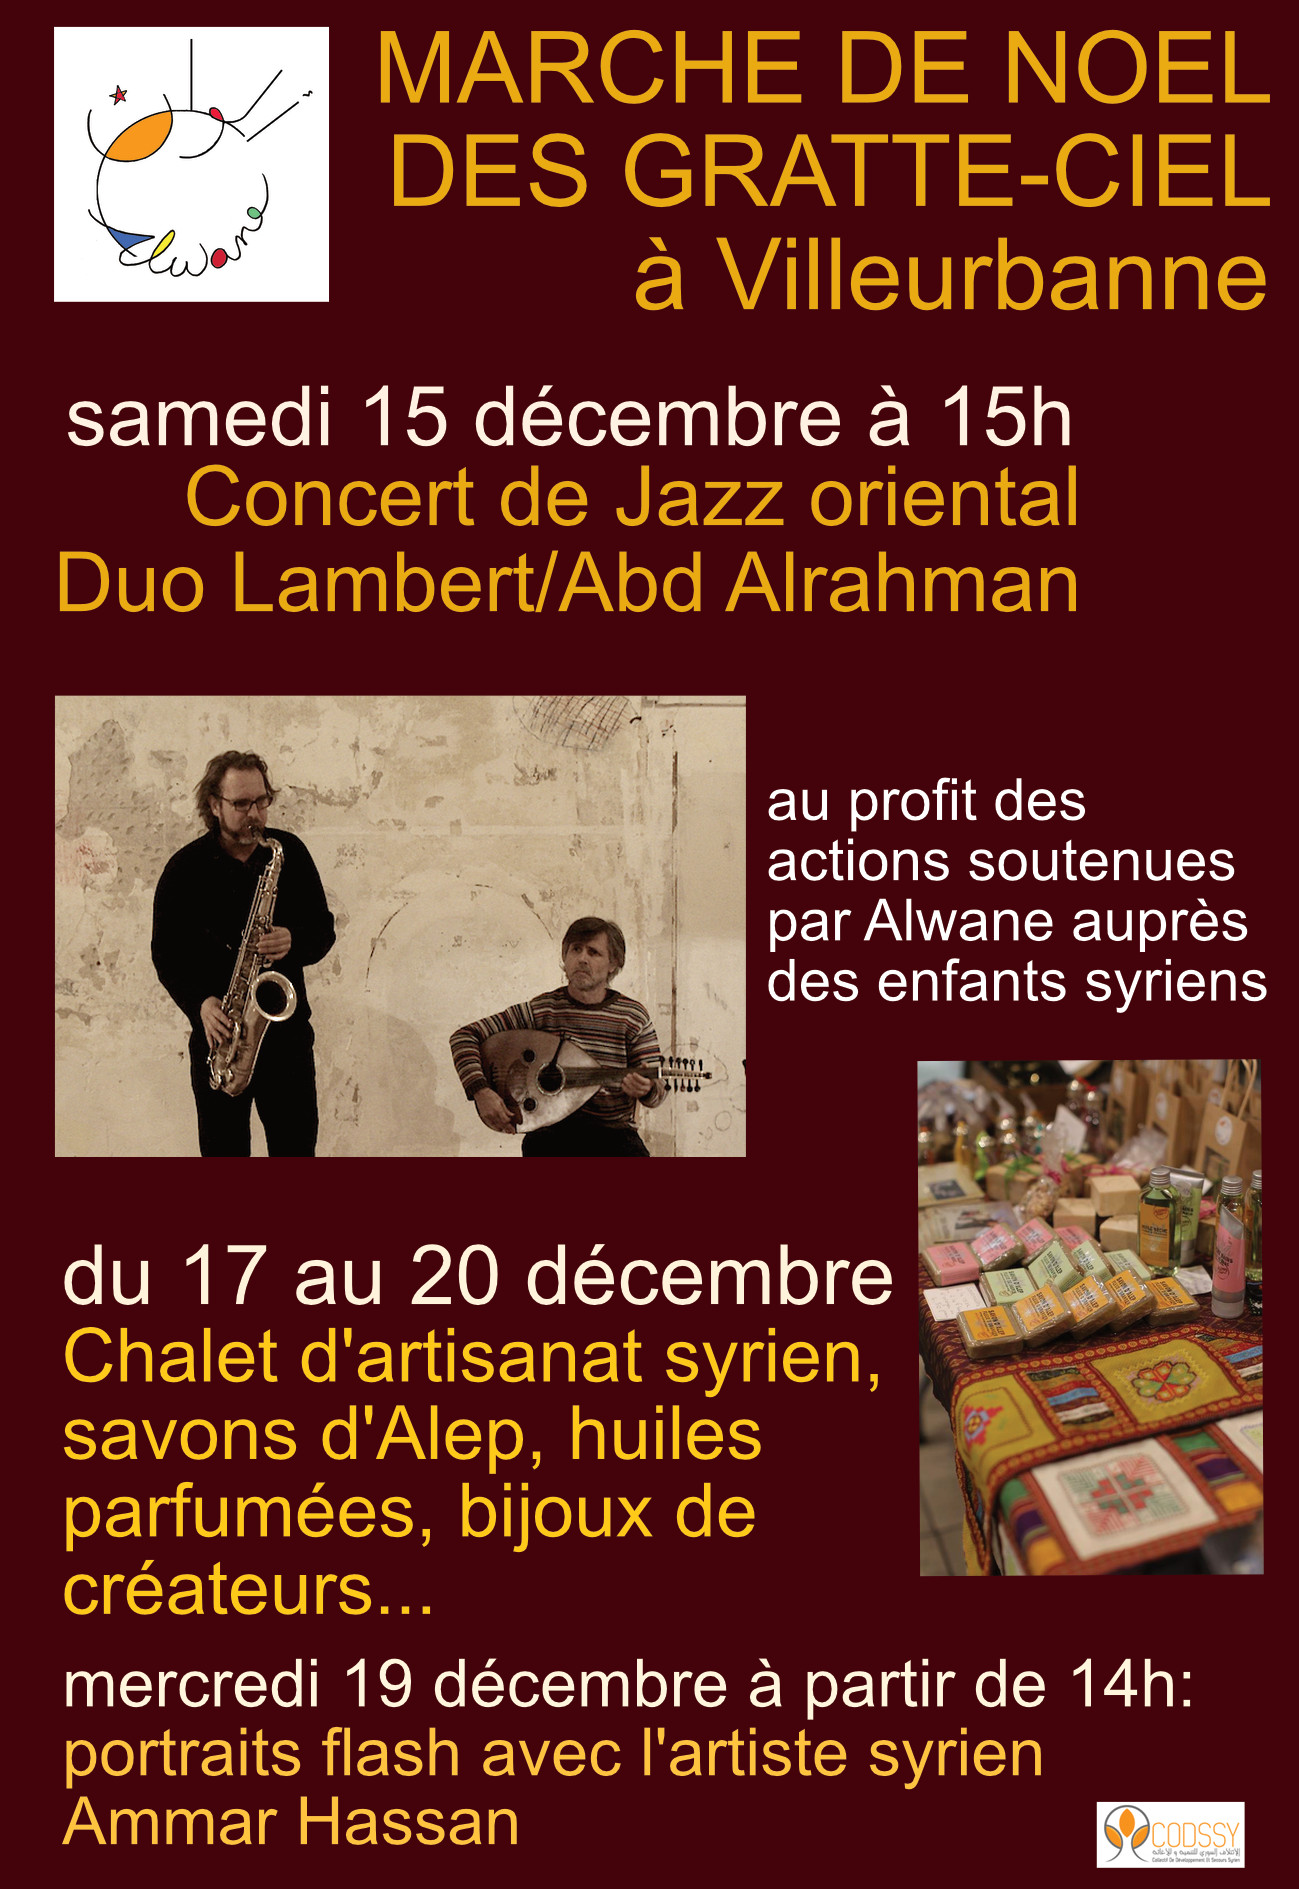 Concert Duo Lambert/Abd Alrahman au Marché de Noël de Villeurbanne